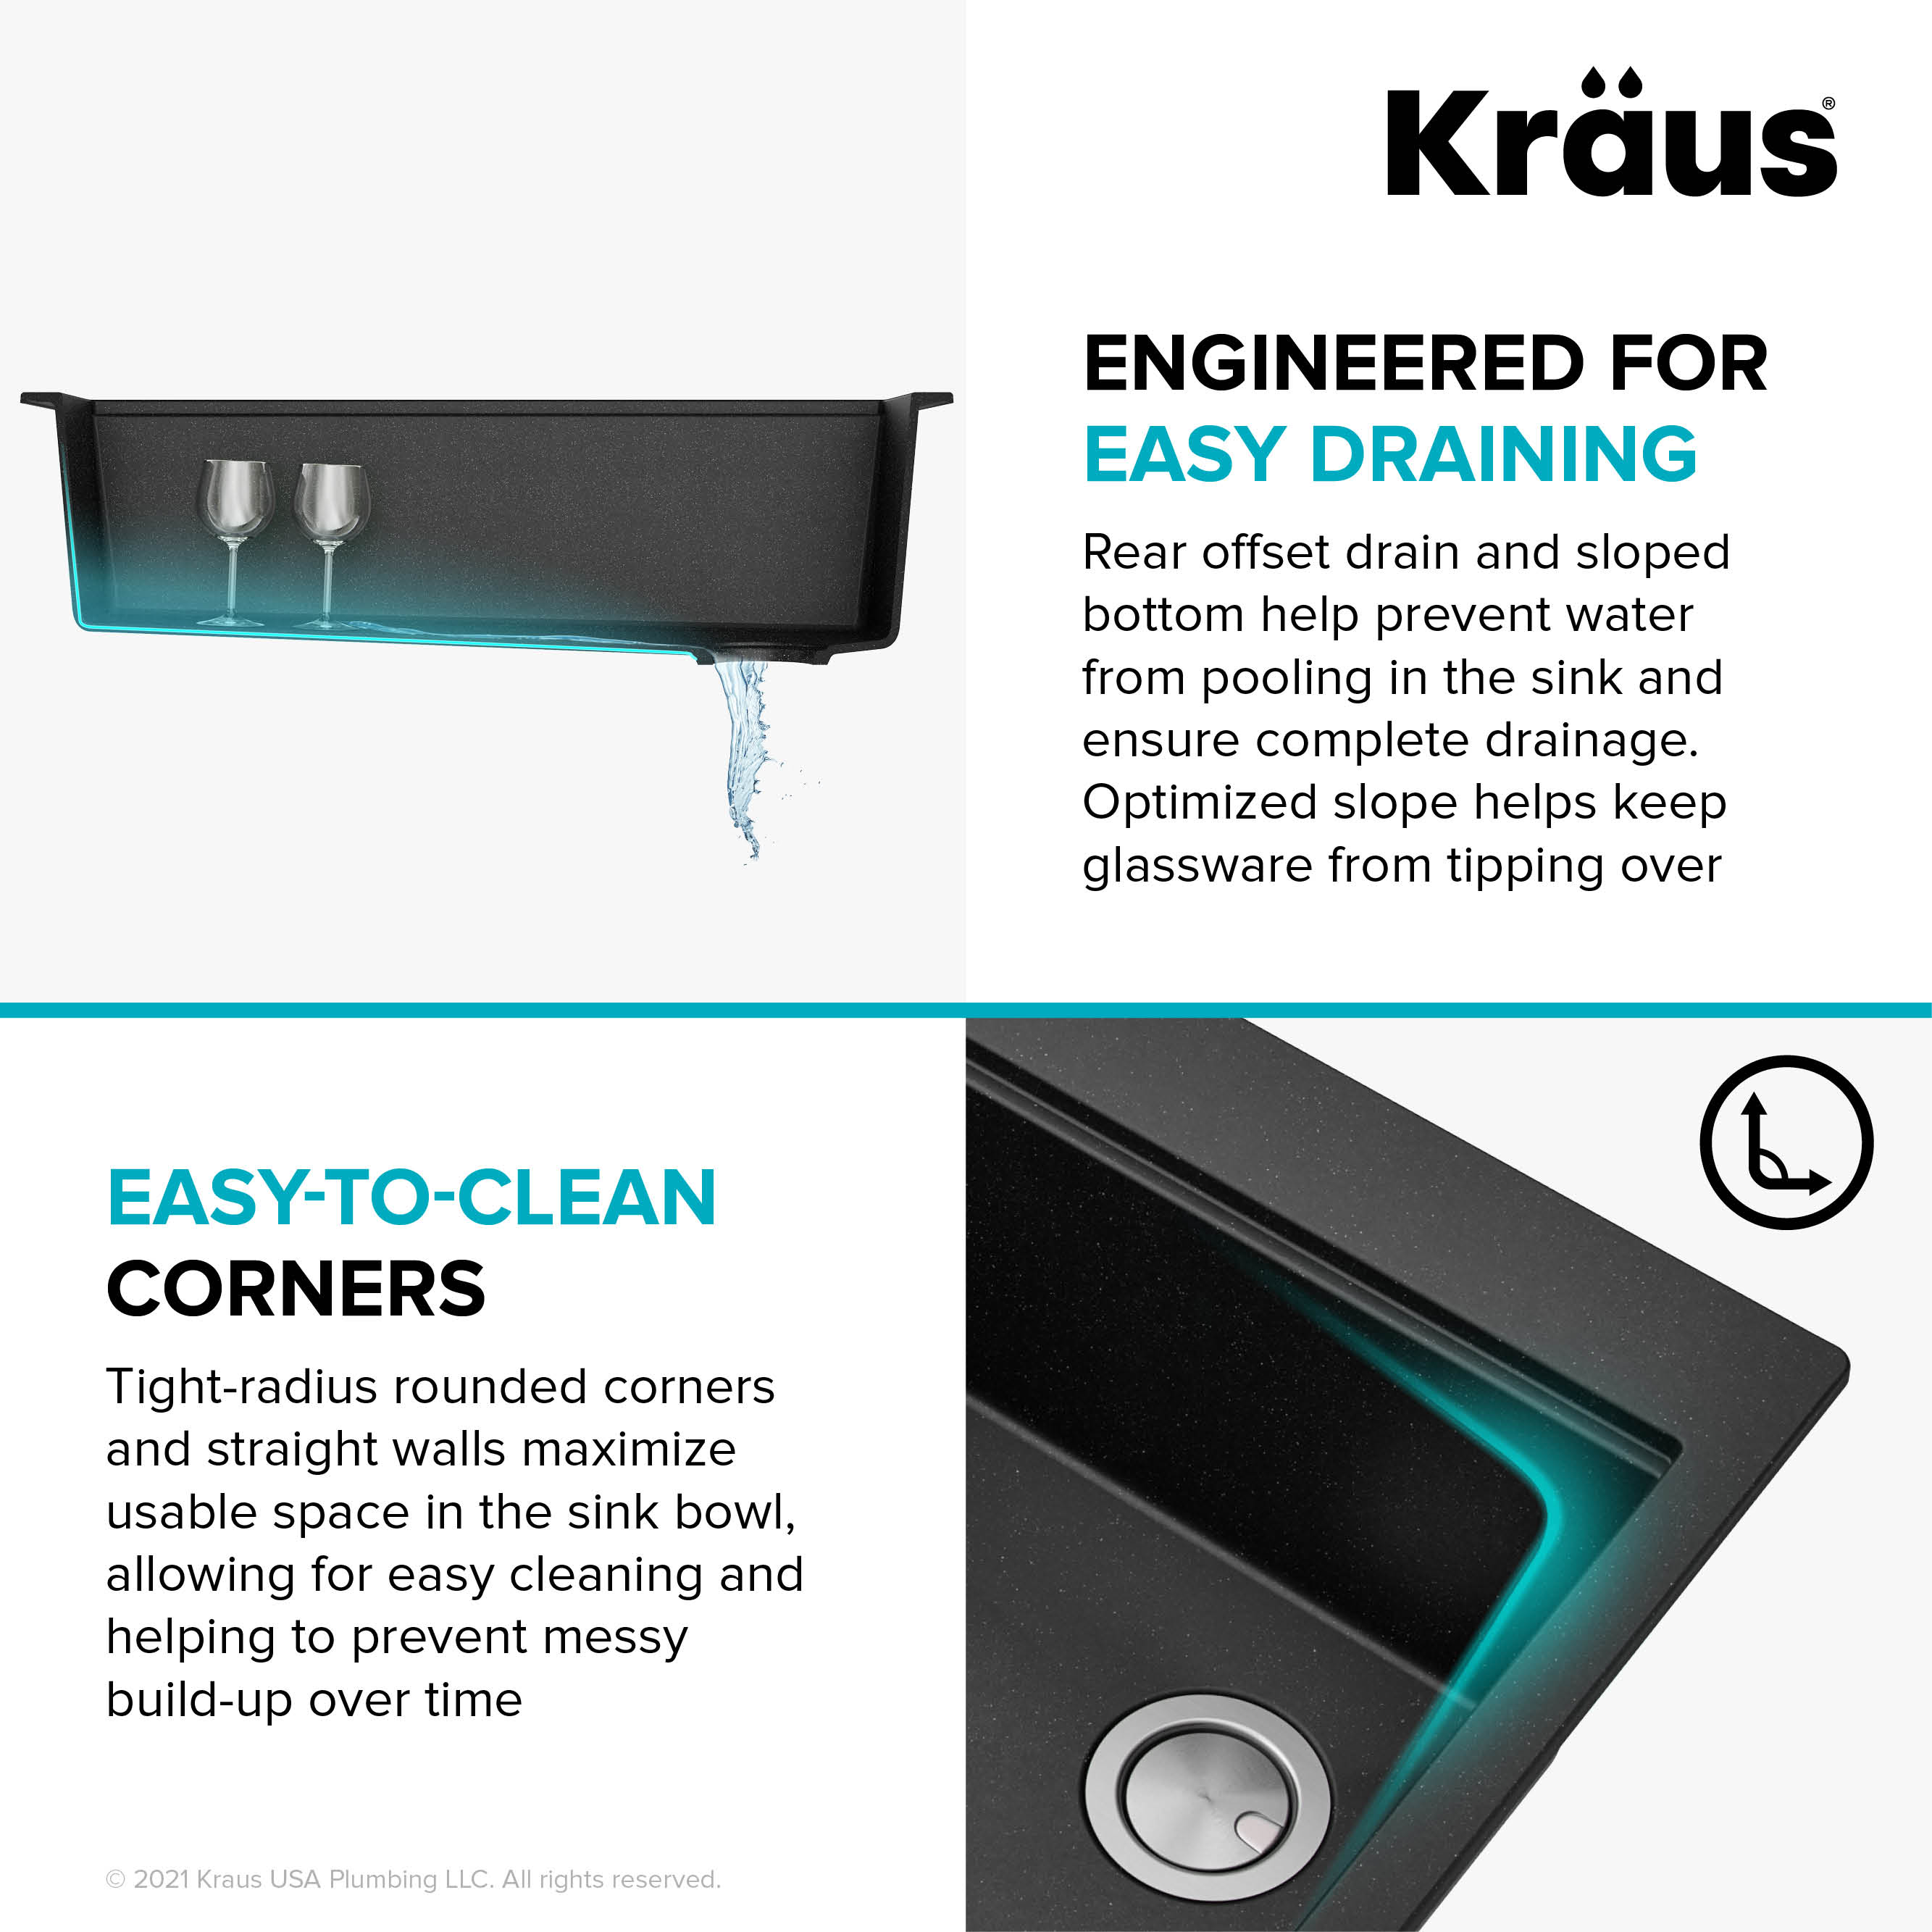 KRAUS Multipurpose Over-Sink Roll-Up Dish Drying Rack, Colander and Trivet  in Black, KRM-10BLACK